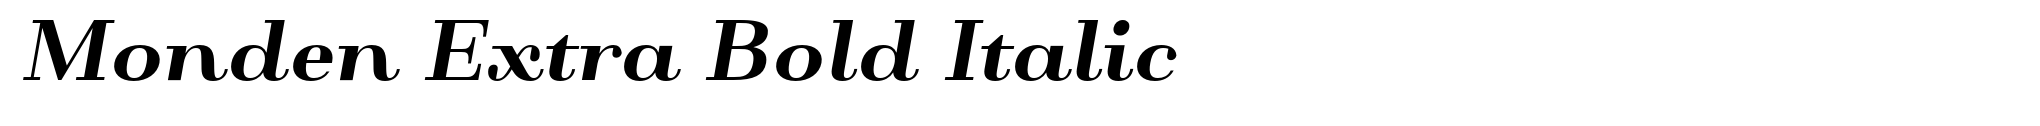 Monden Extra Bold Italic image